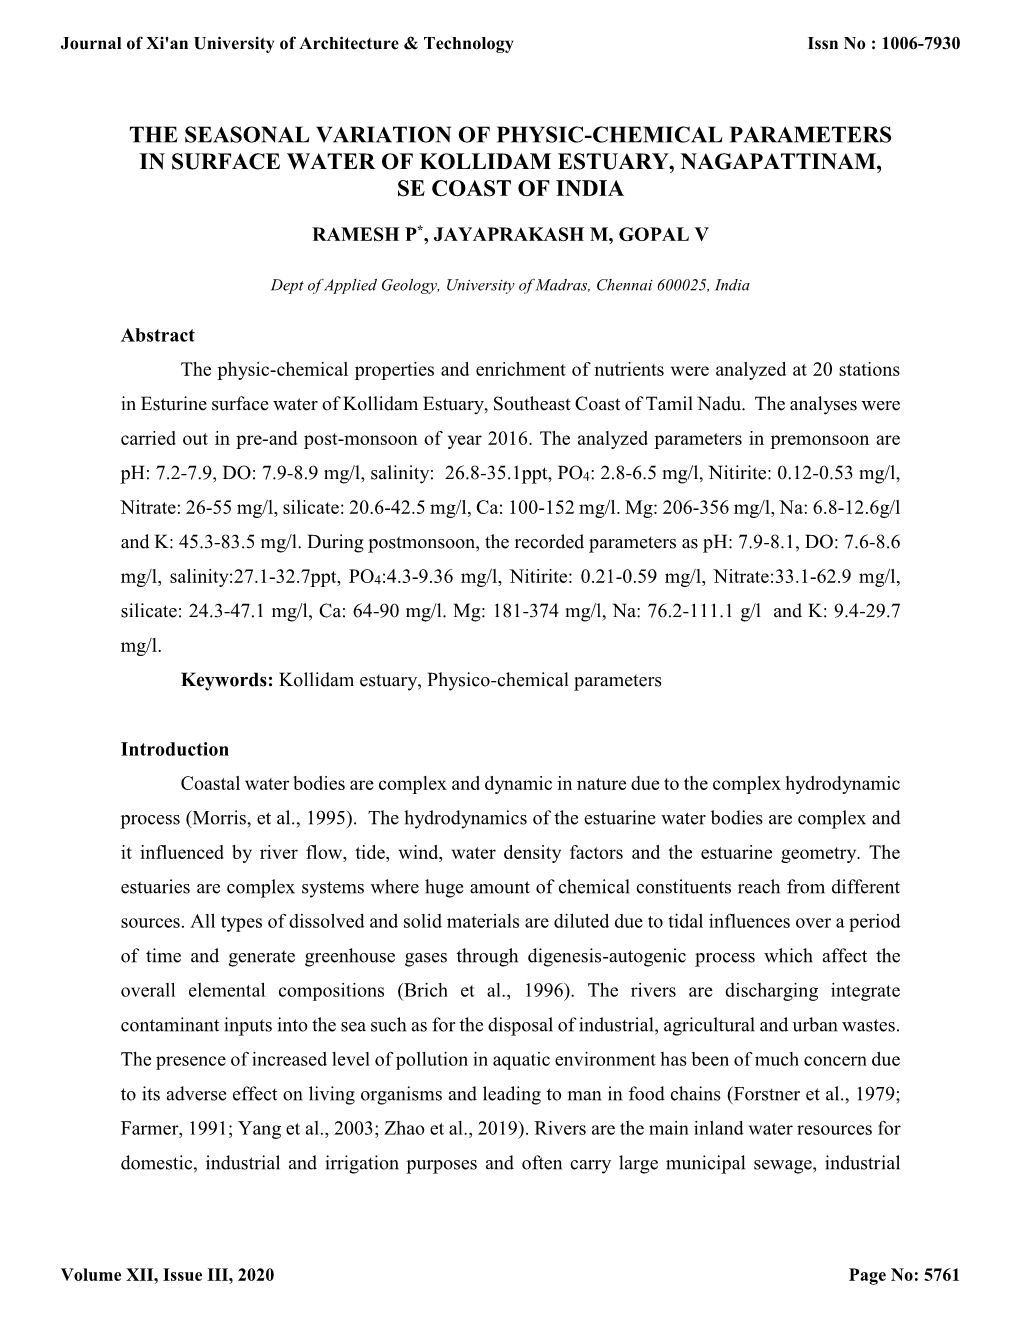 The Seasonal Variation of Physic-Chemical Parameters in Surface Water of Kollidam Estuary, Nagapattinam, Se Coast of India